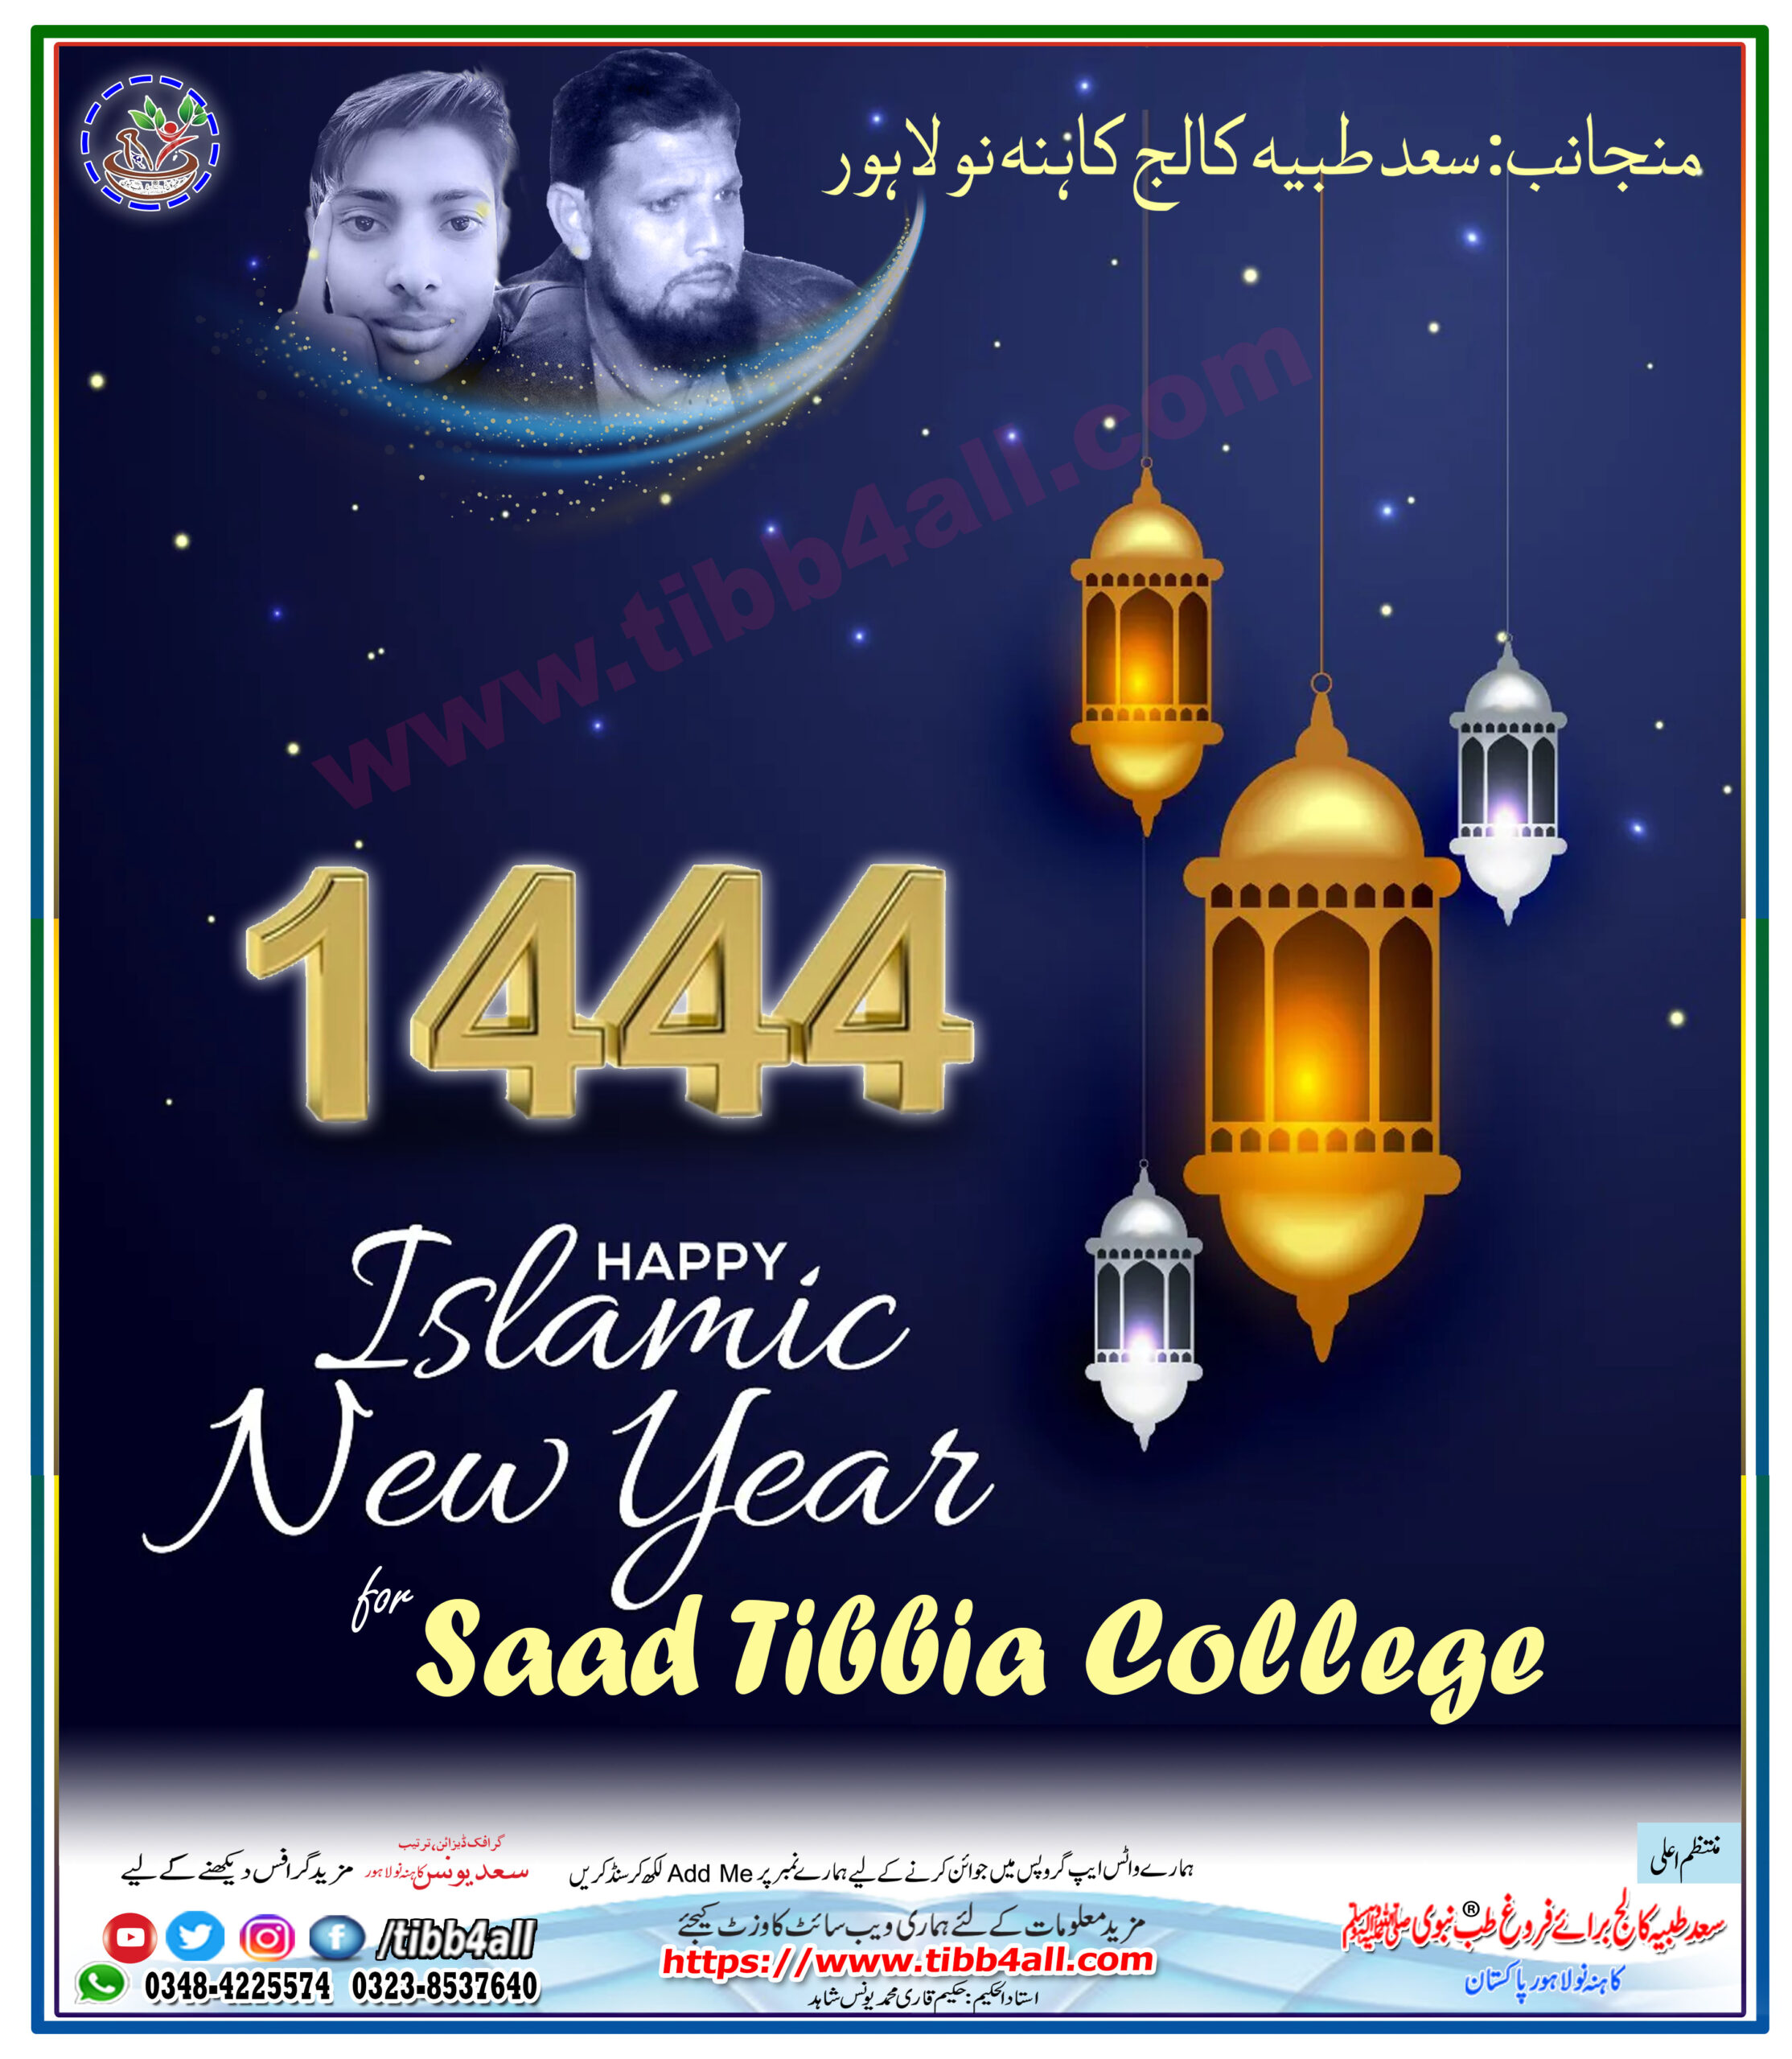 The Islamic new year 1444 by Hakeem qari younas (tibb4all)